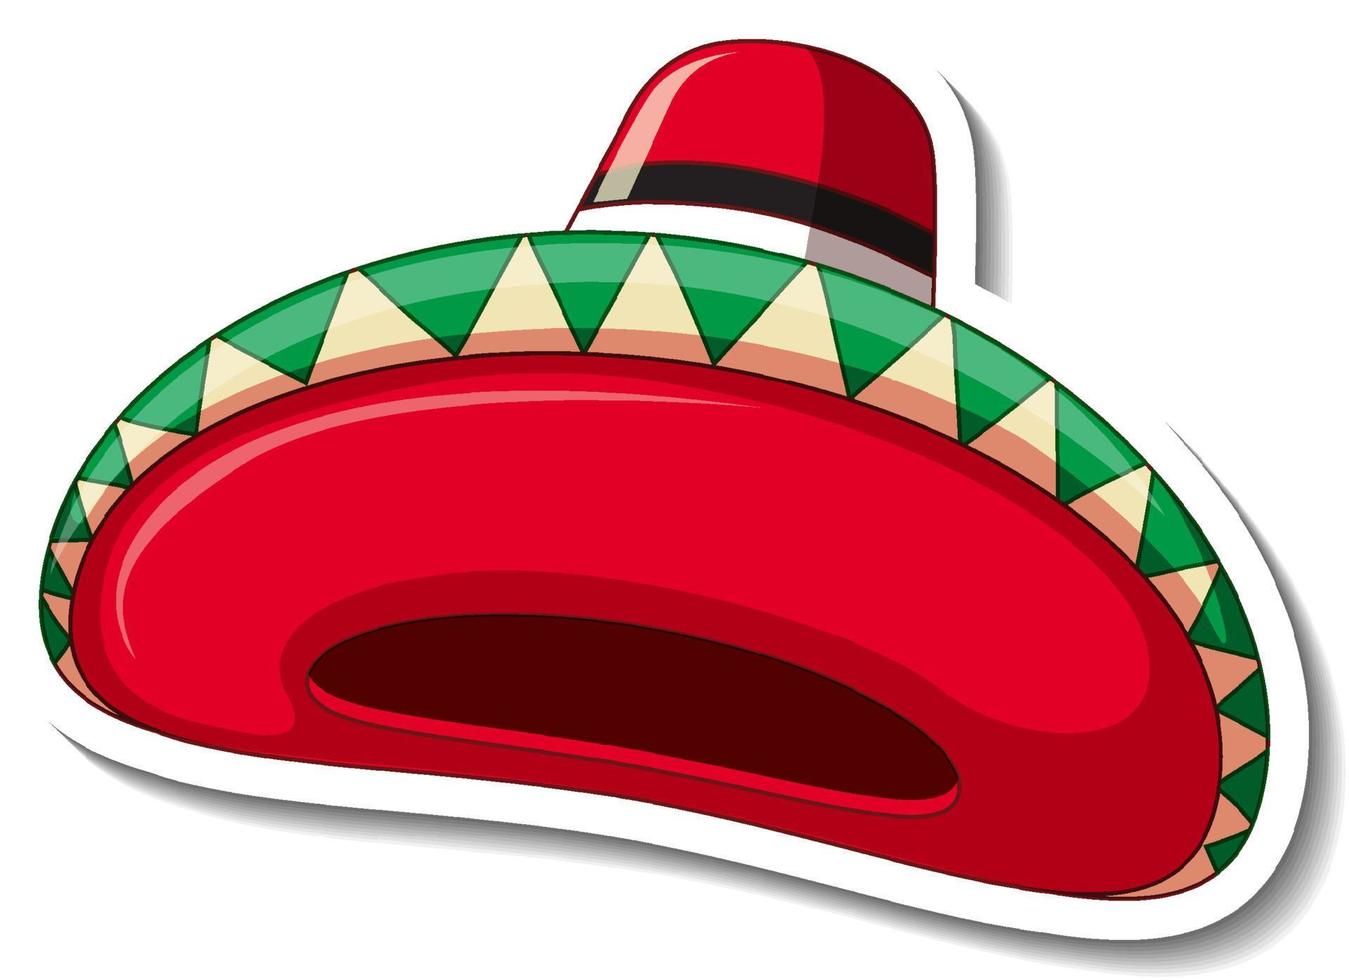 Mexican hat cartoon sticker vector